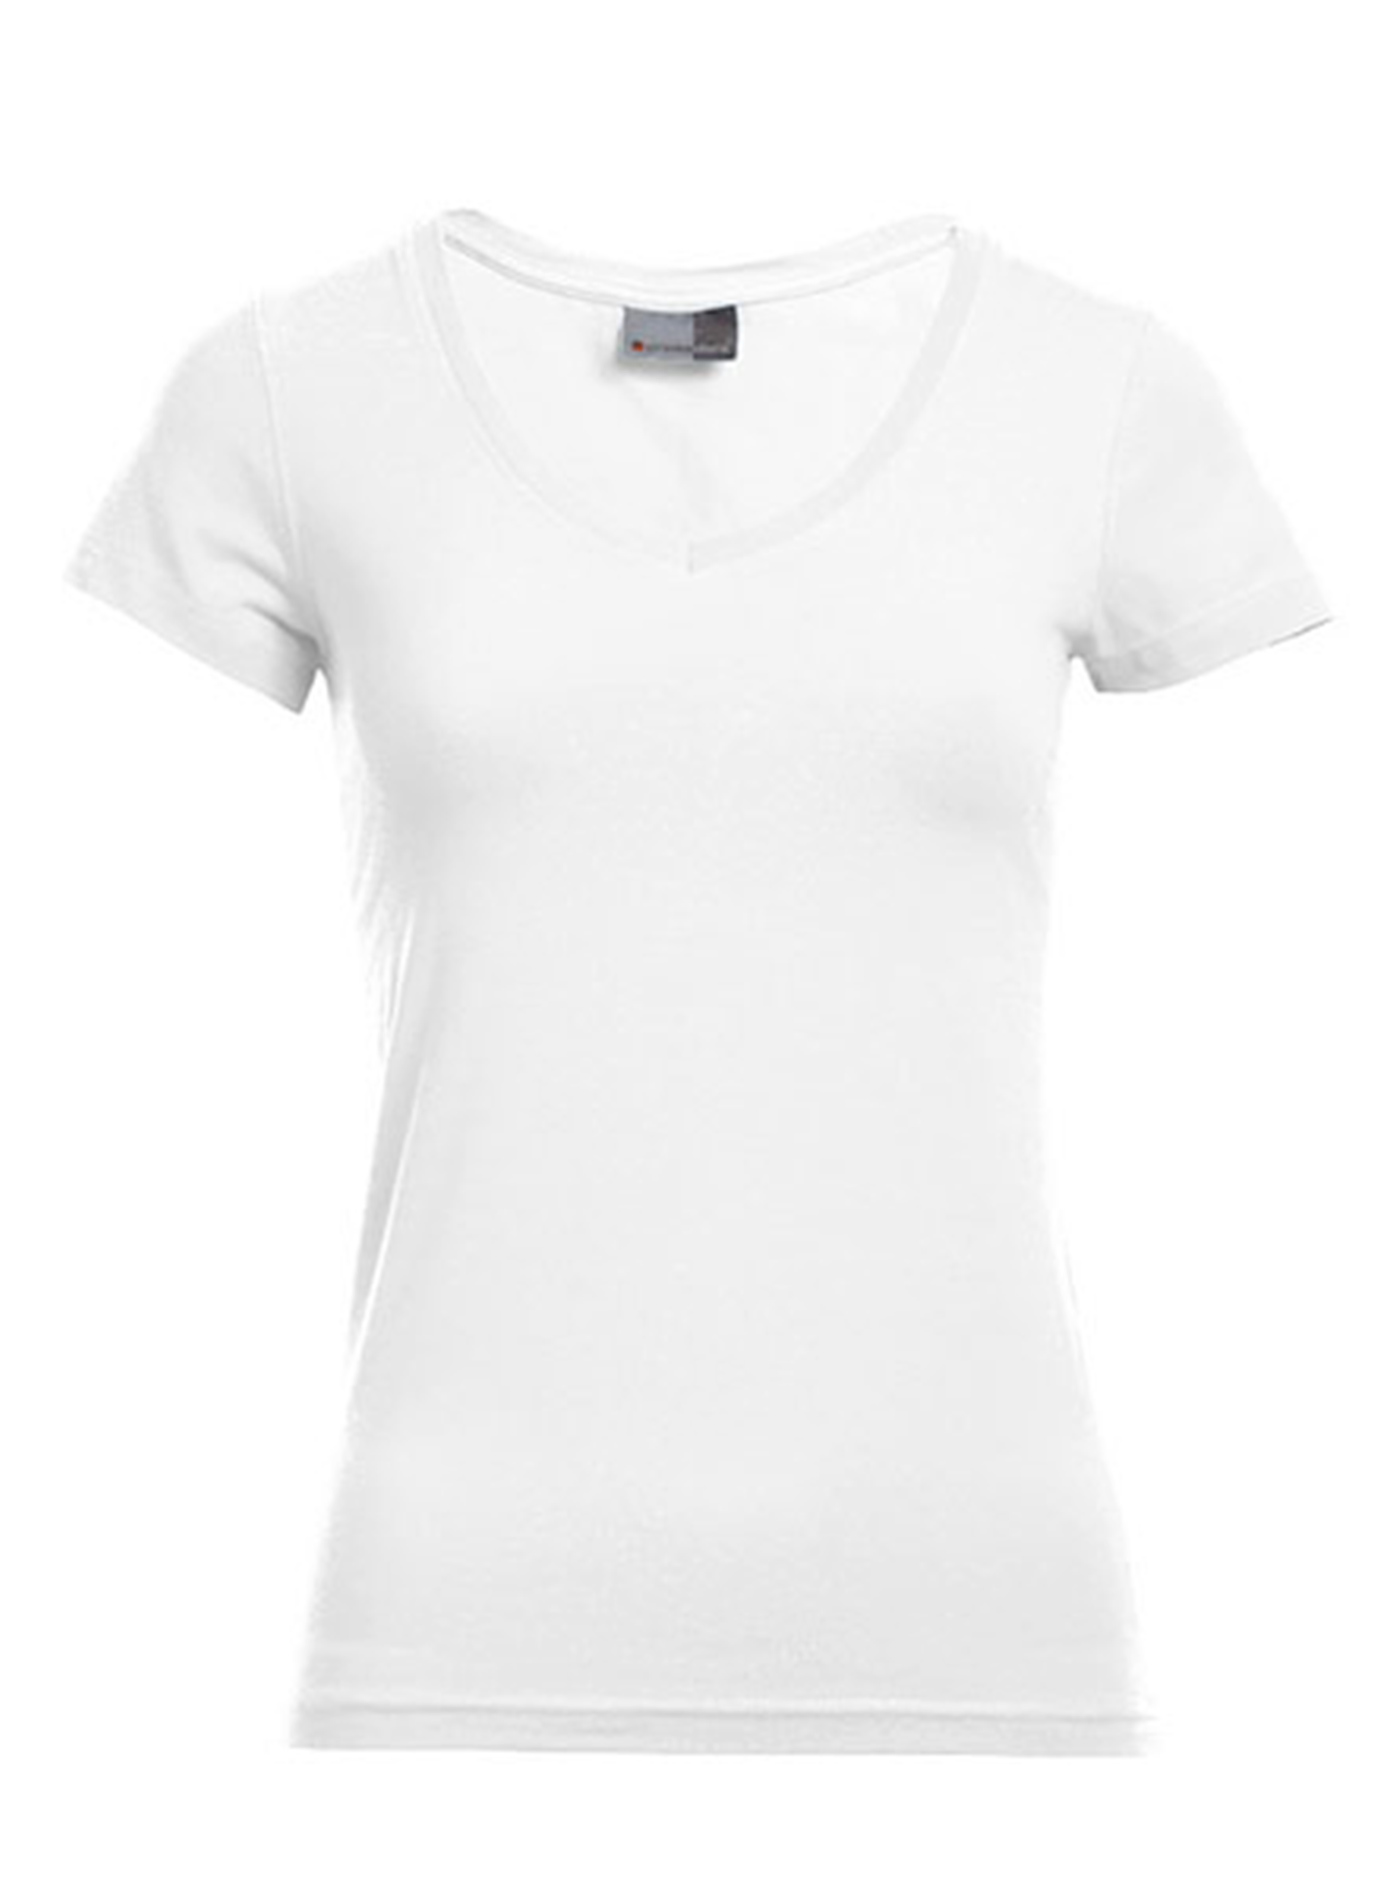 Dámské tričko s výstřihem do V Promodoro - Bílá XS